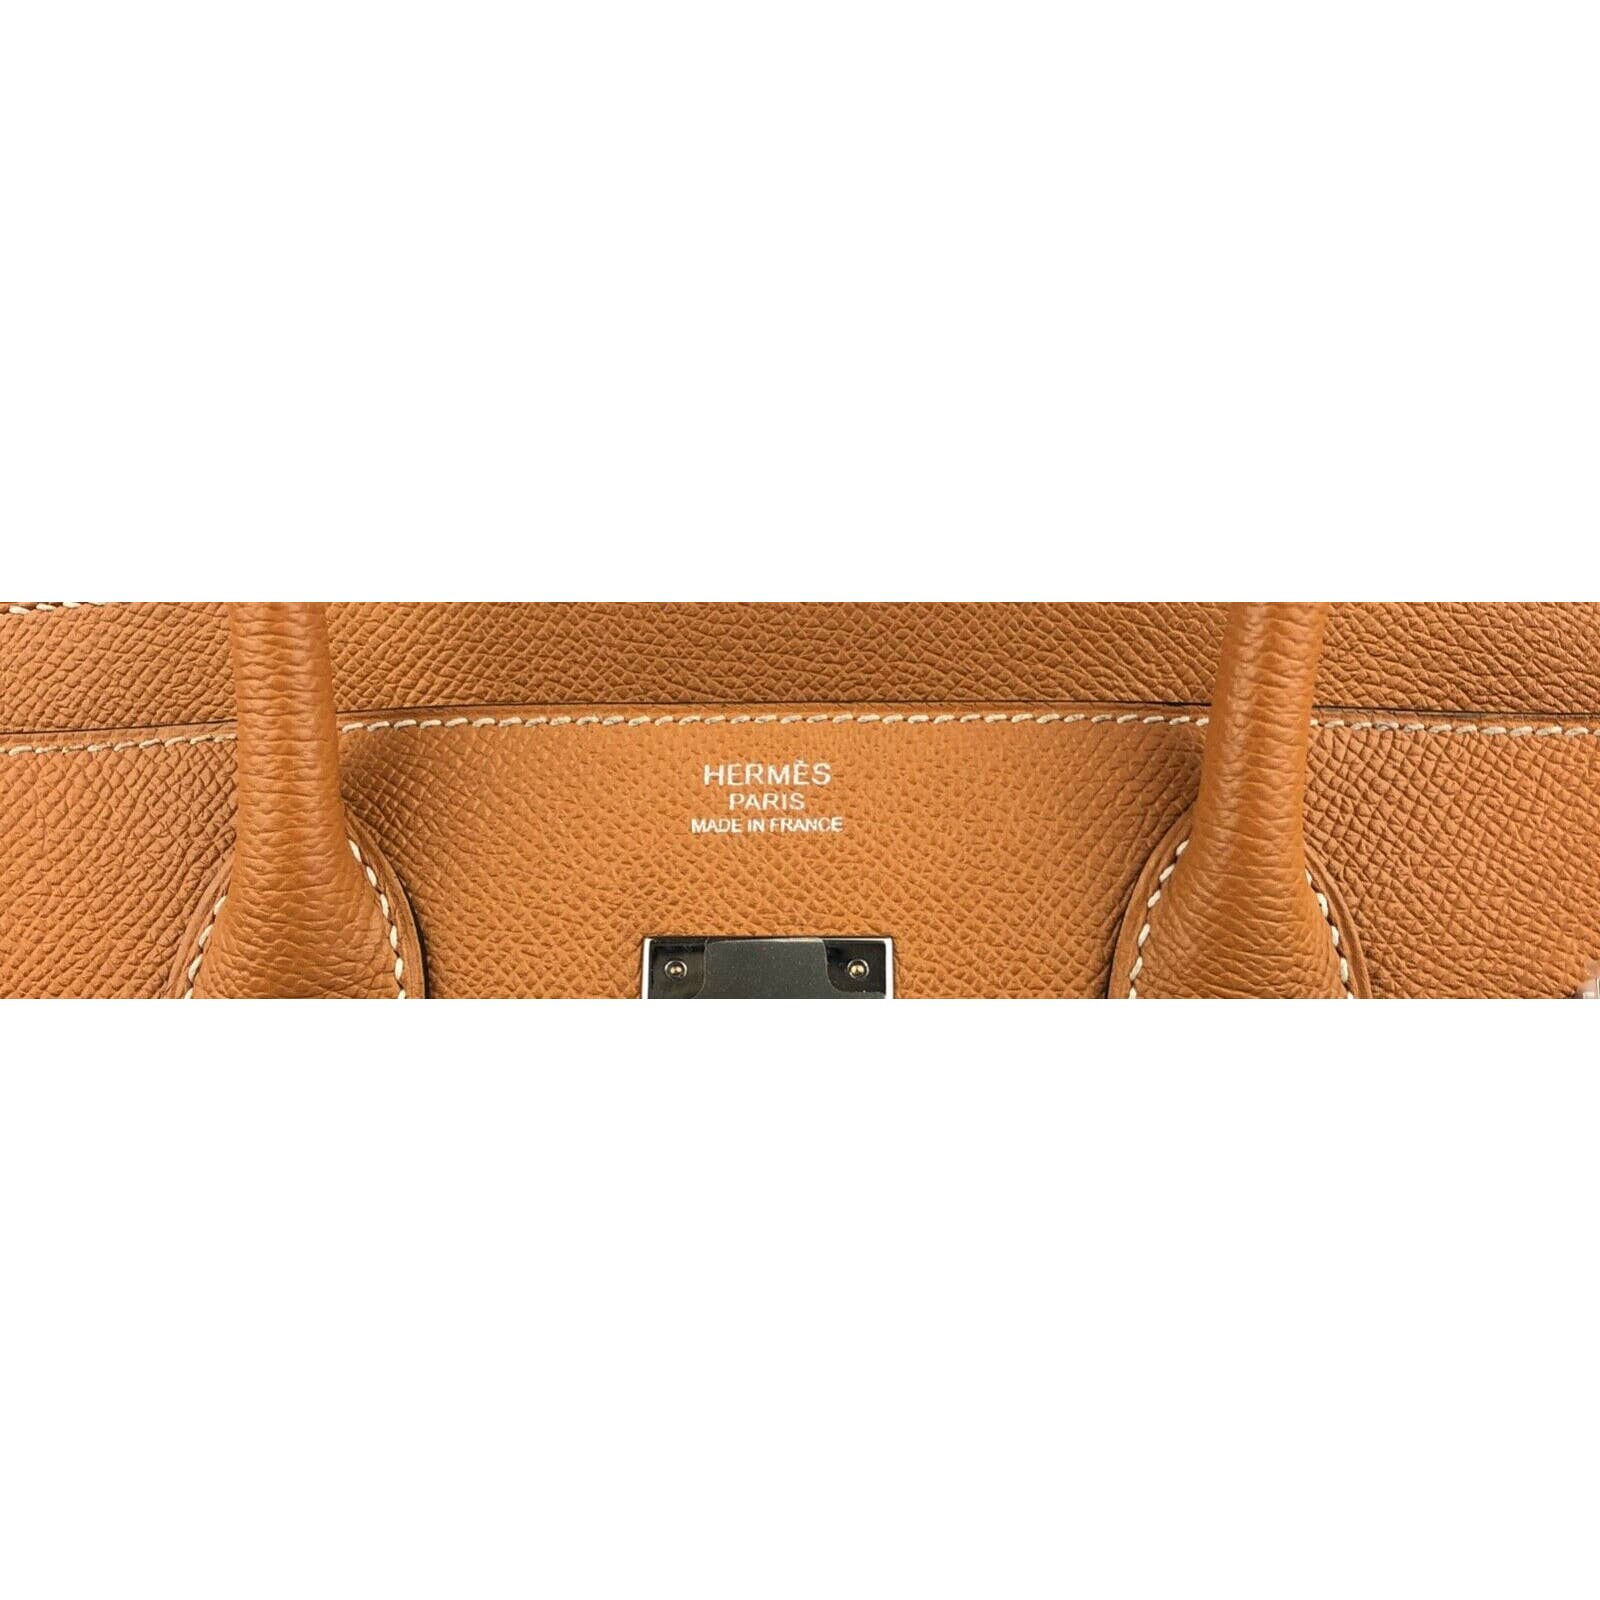 HERMÈS, GRIS ASPHALTE BIRKIN 30CM OF EPSOM LEATHER WITH GOLD HARDWARE, Handbags & Accessories, 2020